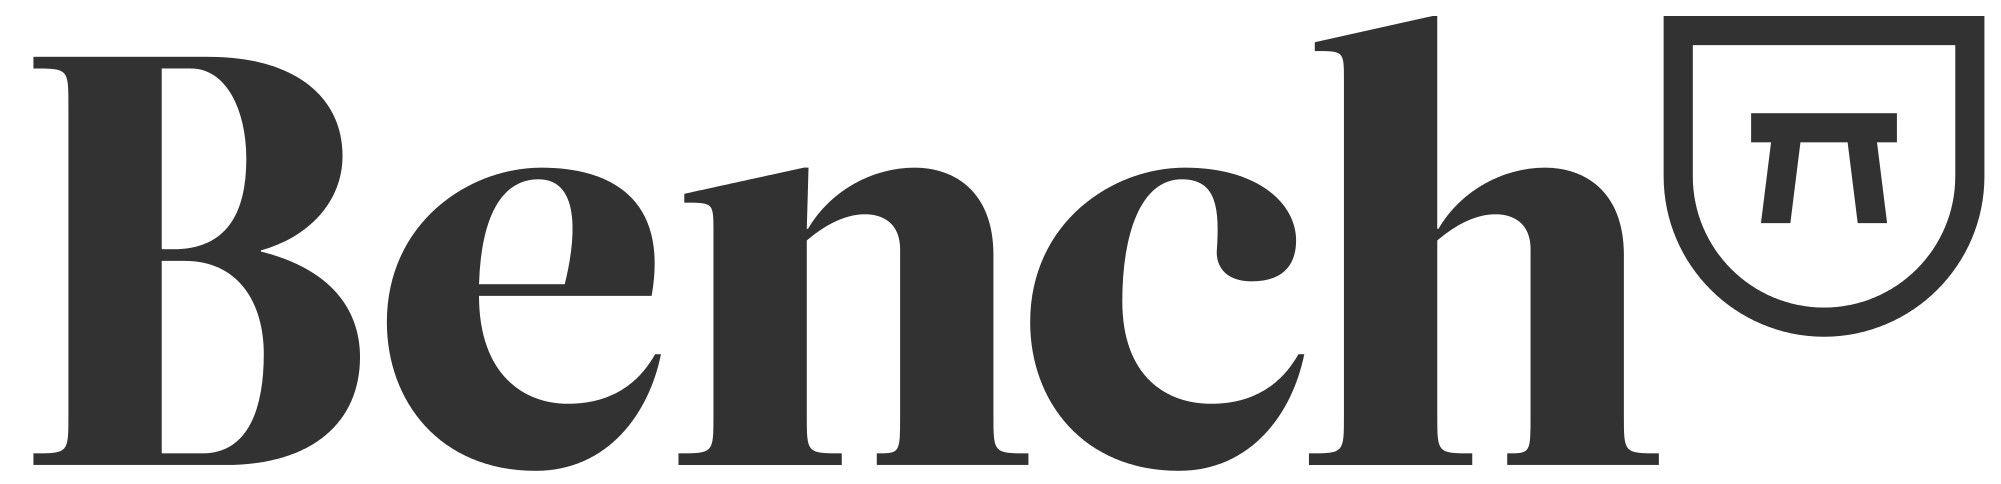 Bench Logo - Bench Logo - Accountingprose